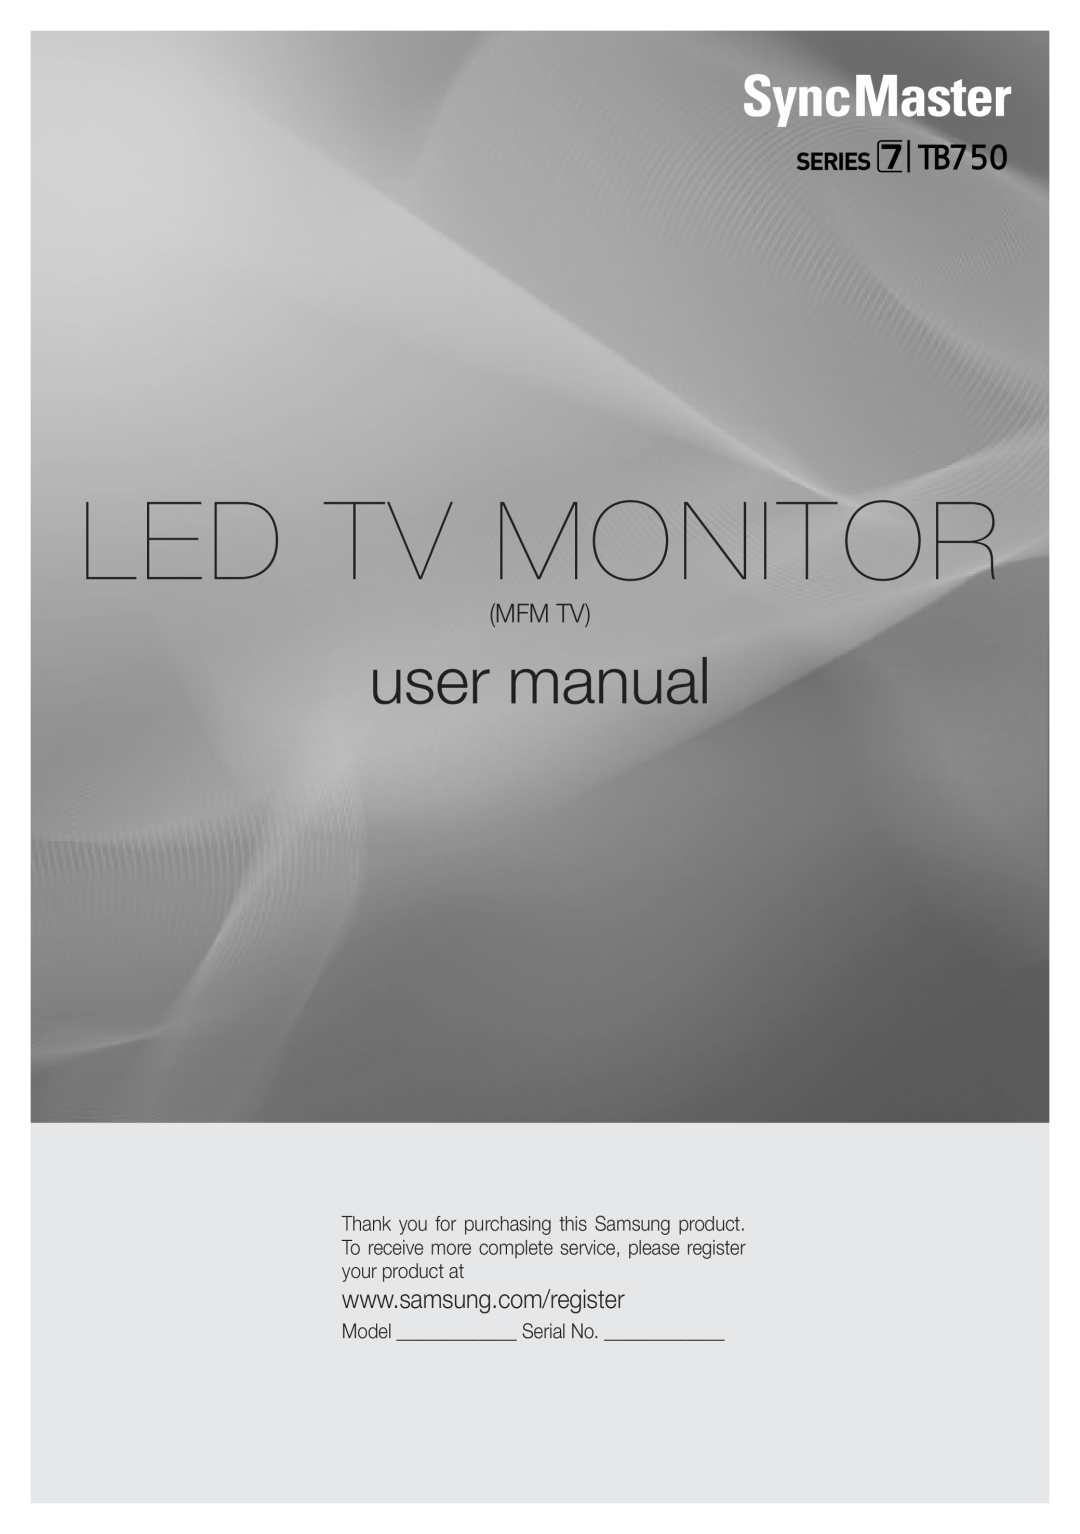 Samsung LT24B750EW/EN, LT27B750EWV/EN, LT27B750EW/EN manual Mfm Tv, Led Tv Monitor, használati útmutató, 5# 